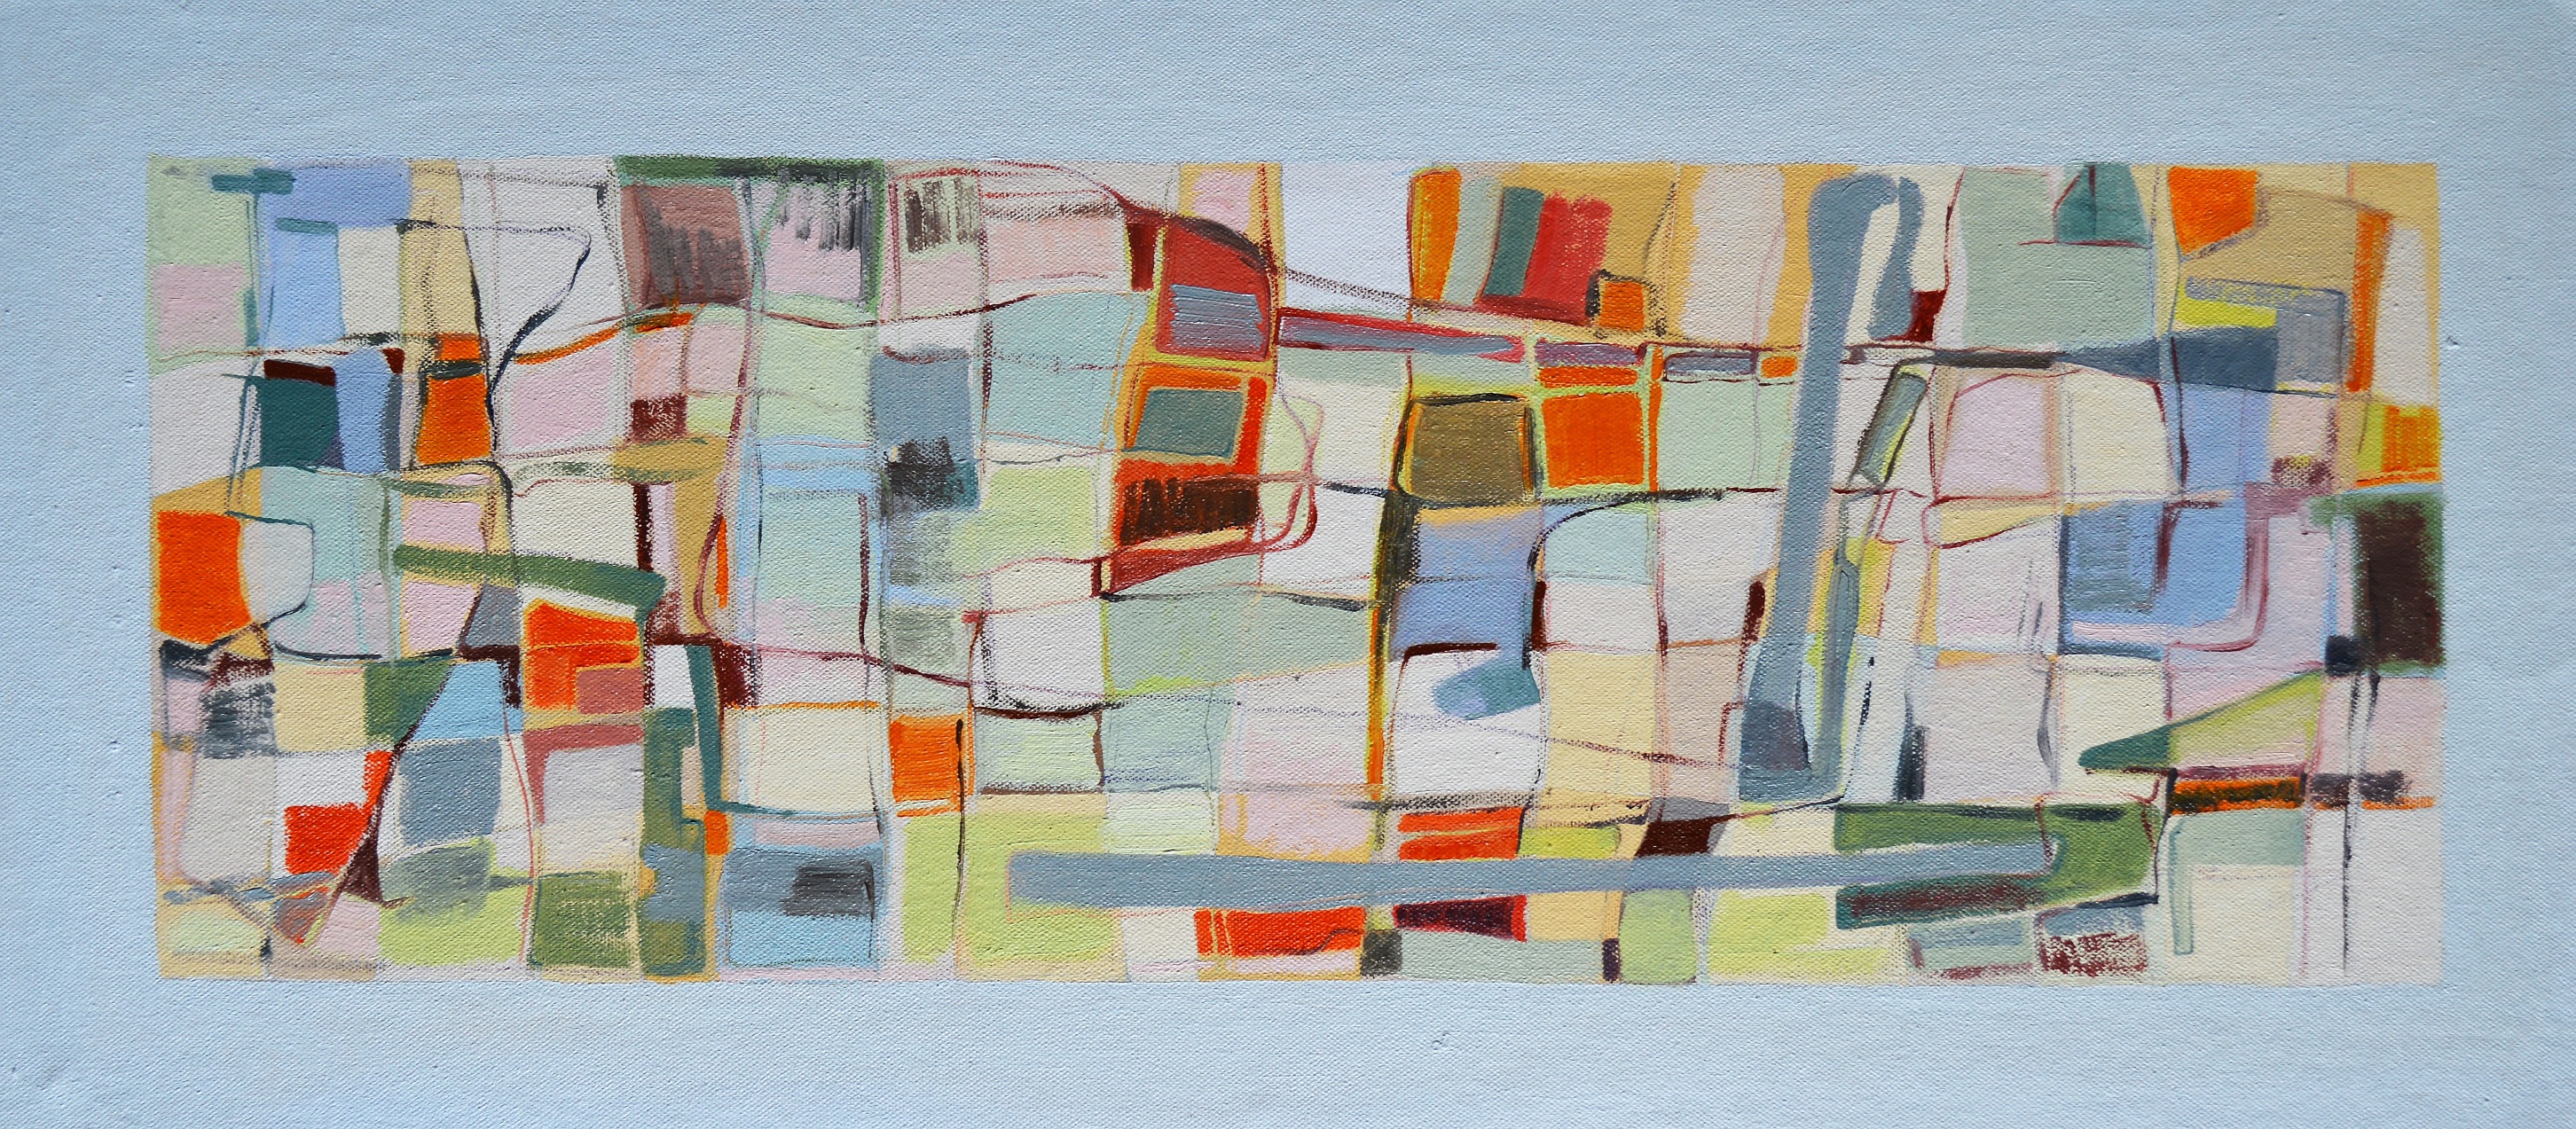 'Patterning # 9' 2020. Oil, crayon on canvas. Framed size 60cm x 26cm.